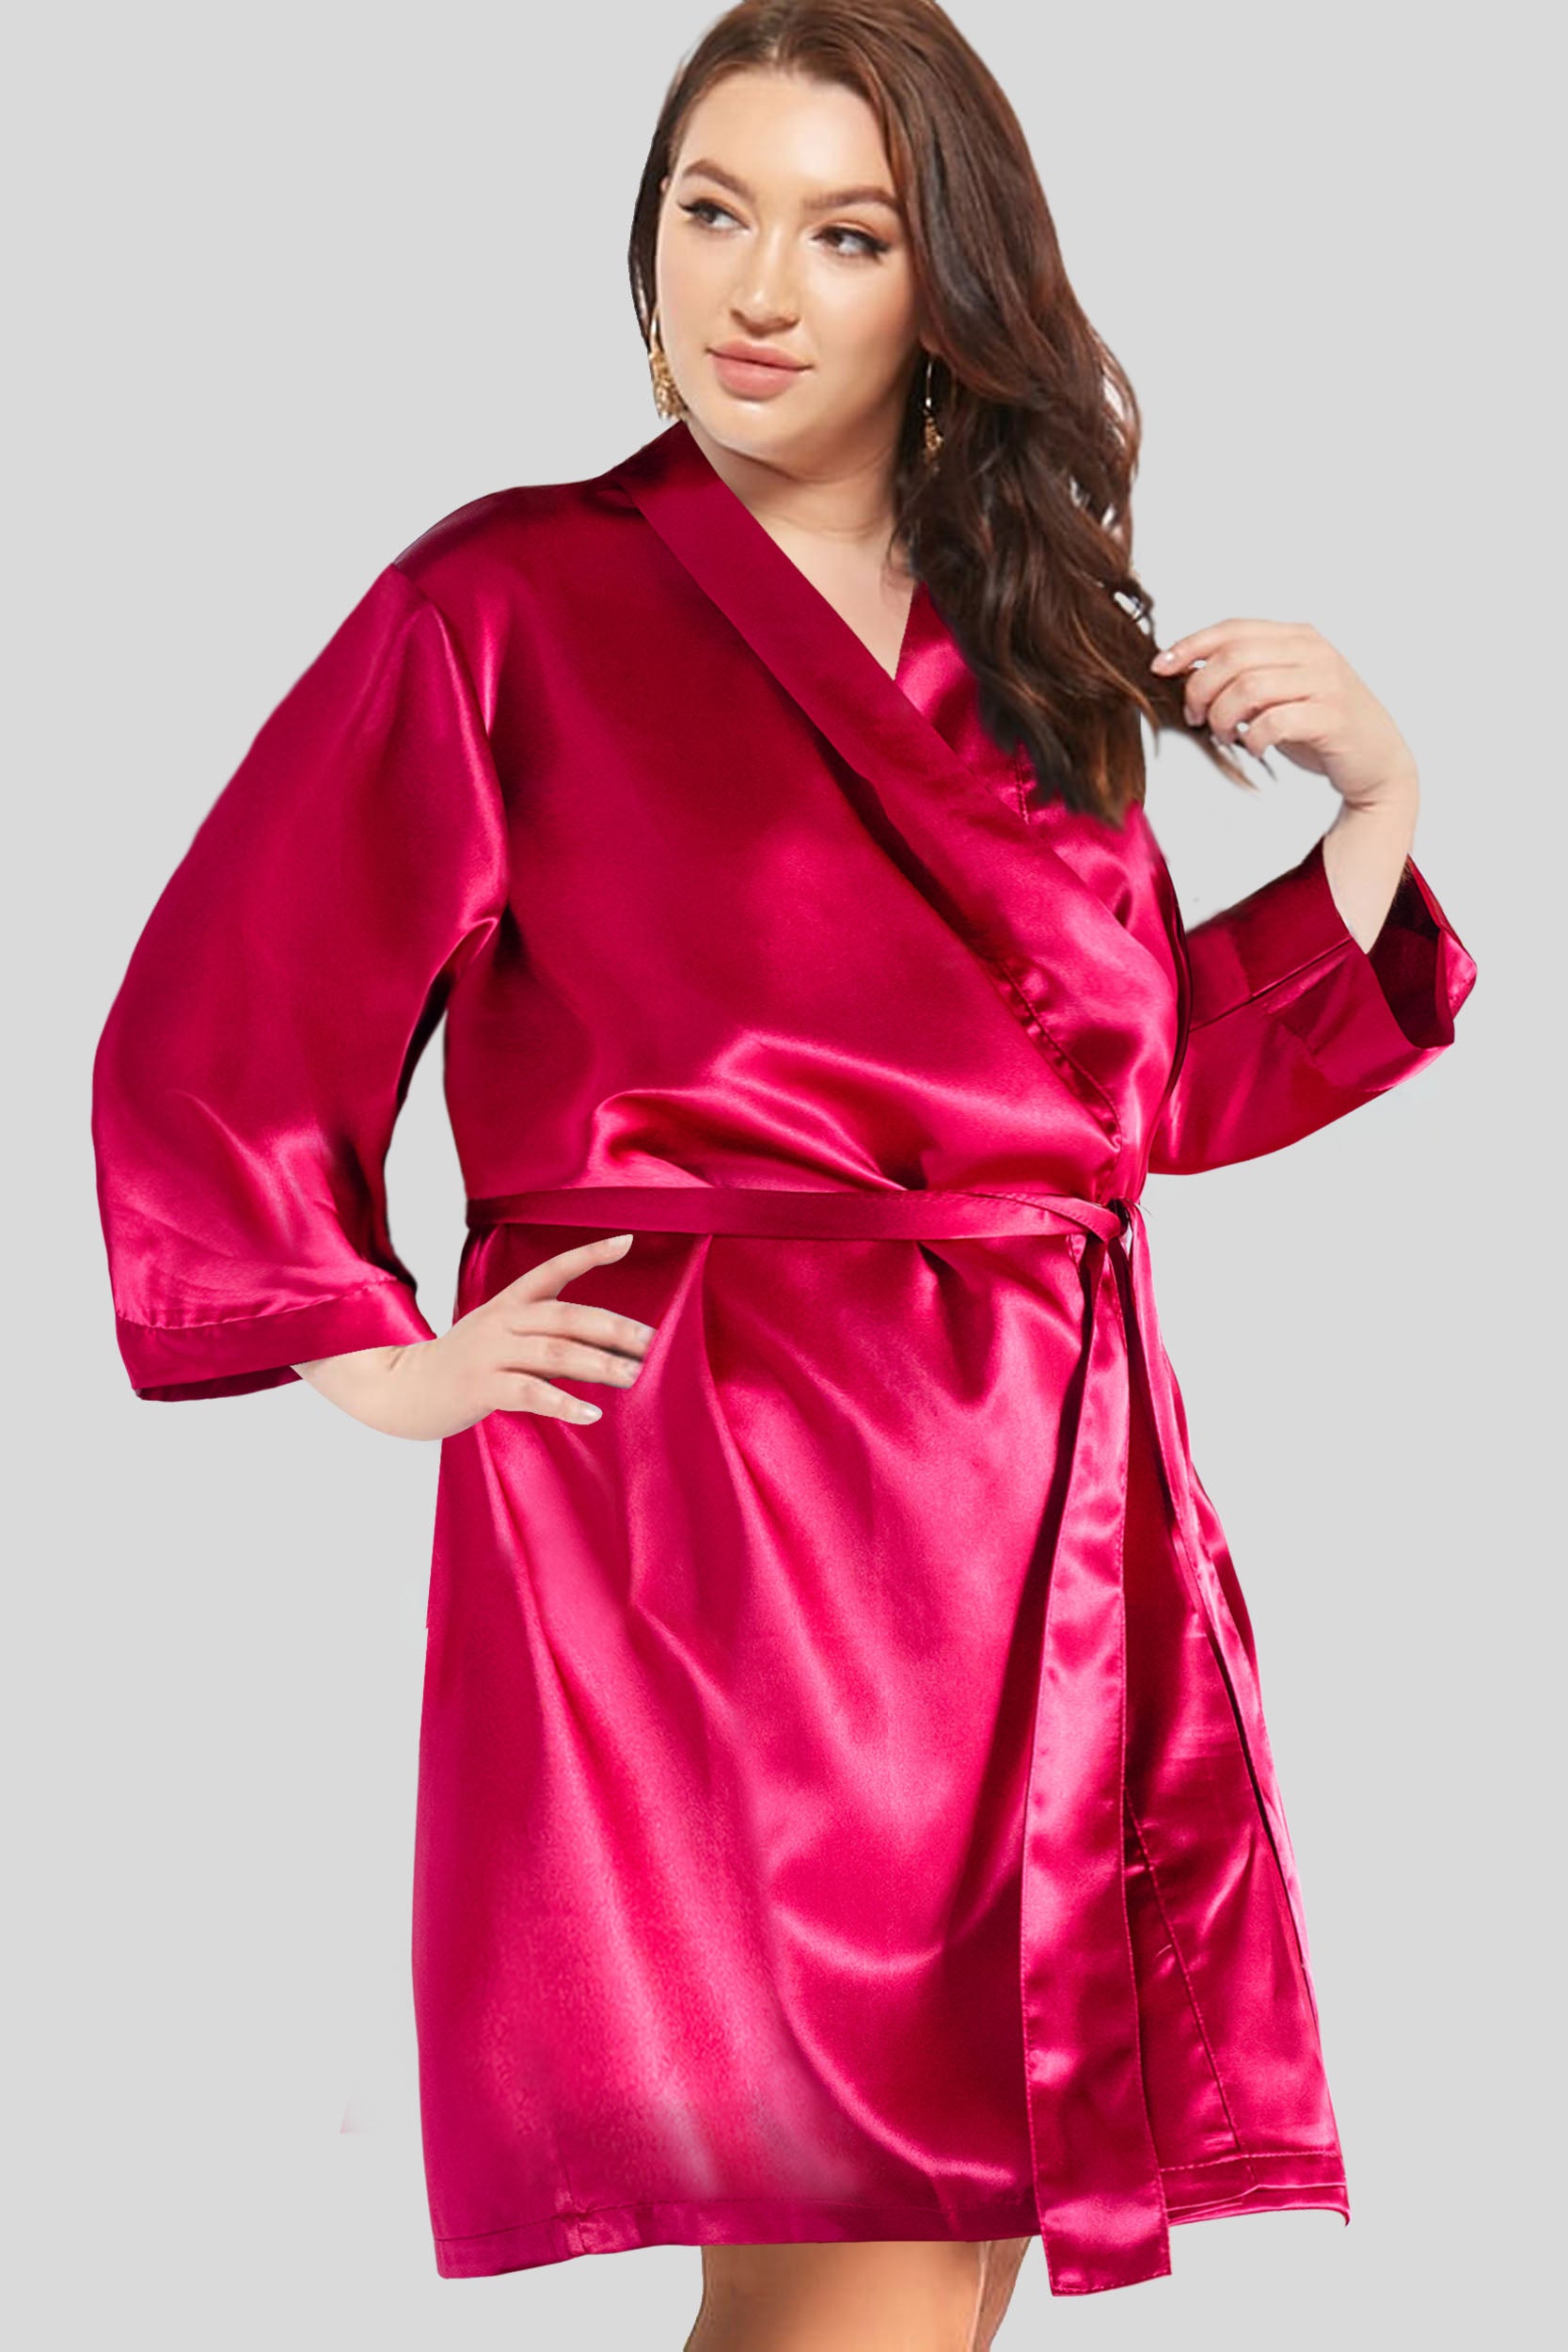 Crimson Robes, Satin Robes, Wedding Robes, Bridesmaid Robes on Sale ...